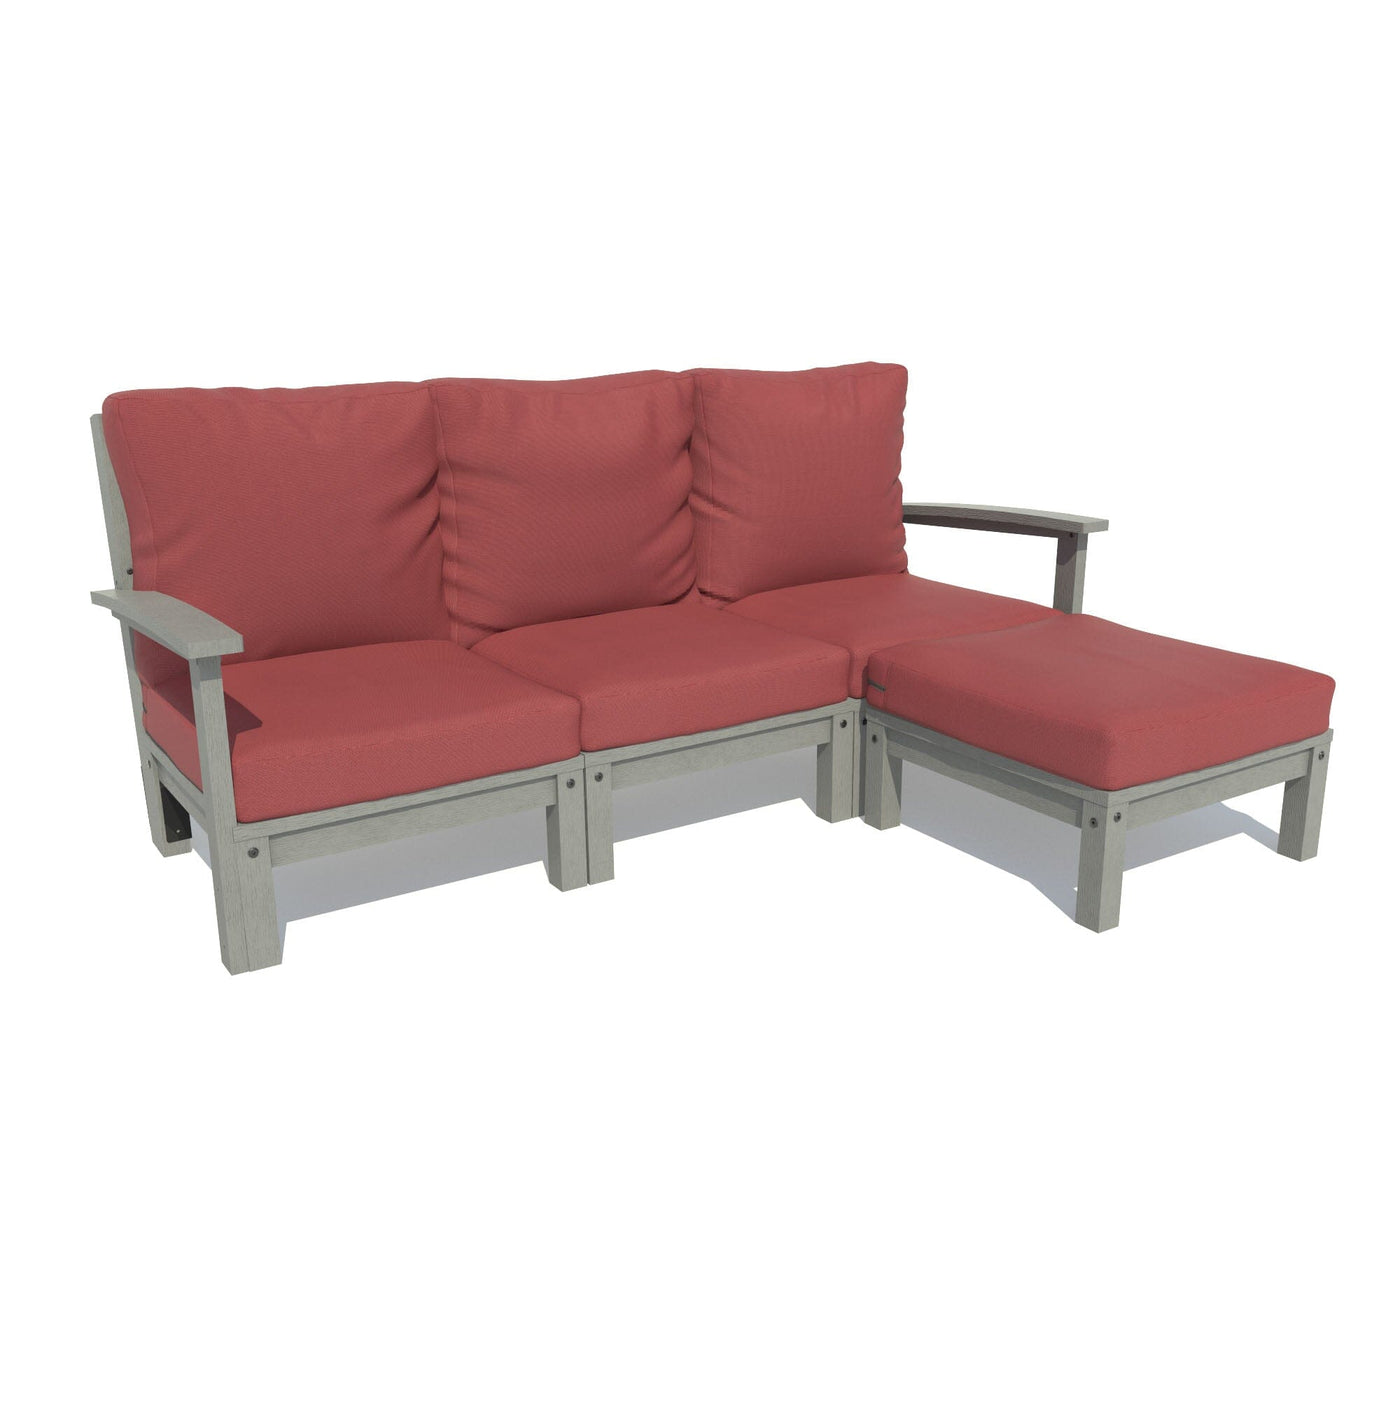 Bespoke Deep Seating: Sofa and Ottoman Deep Seating Highwood USA Firecracker Red Coastal Teak 